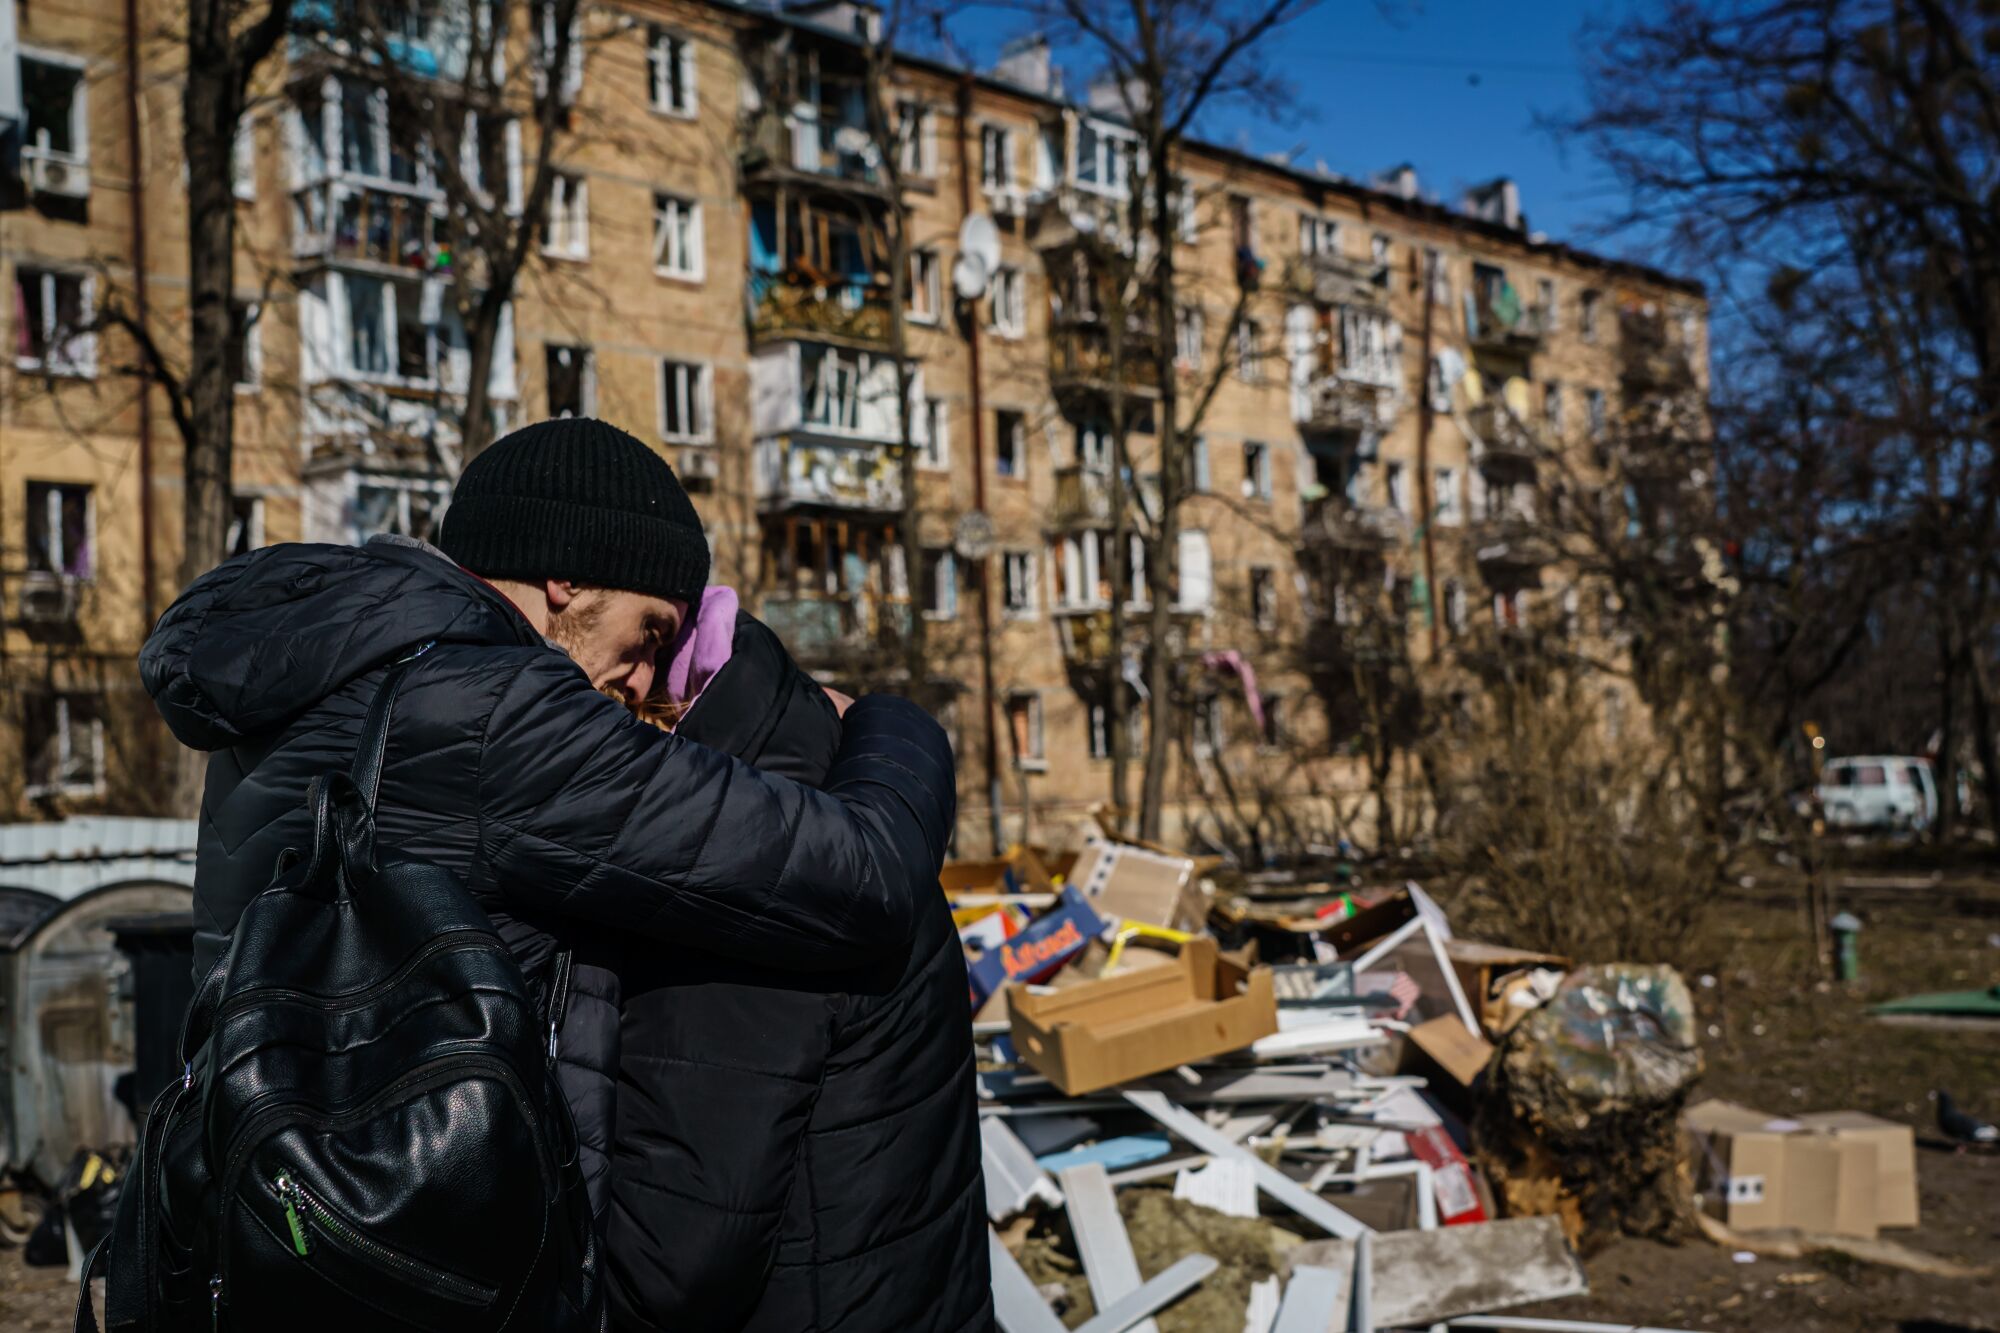 Evheniy Nikolin, left, consoles Evheniya Horho, after a residential area was attacked in Kyiv, Ukraine.